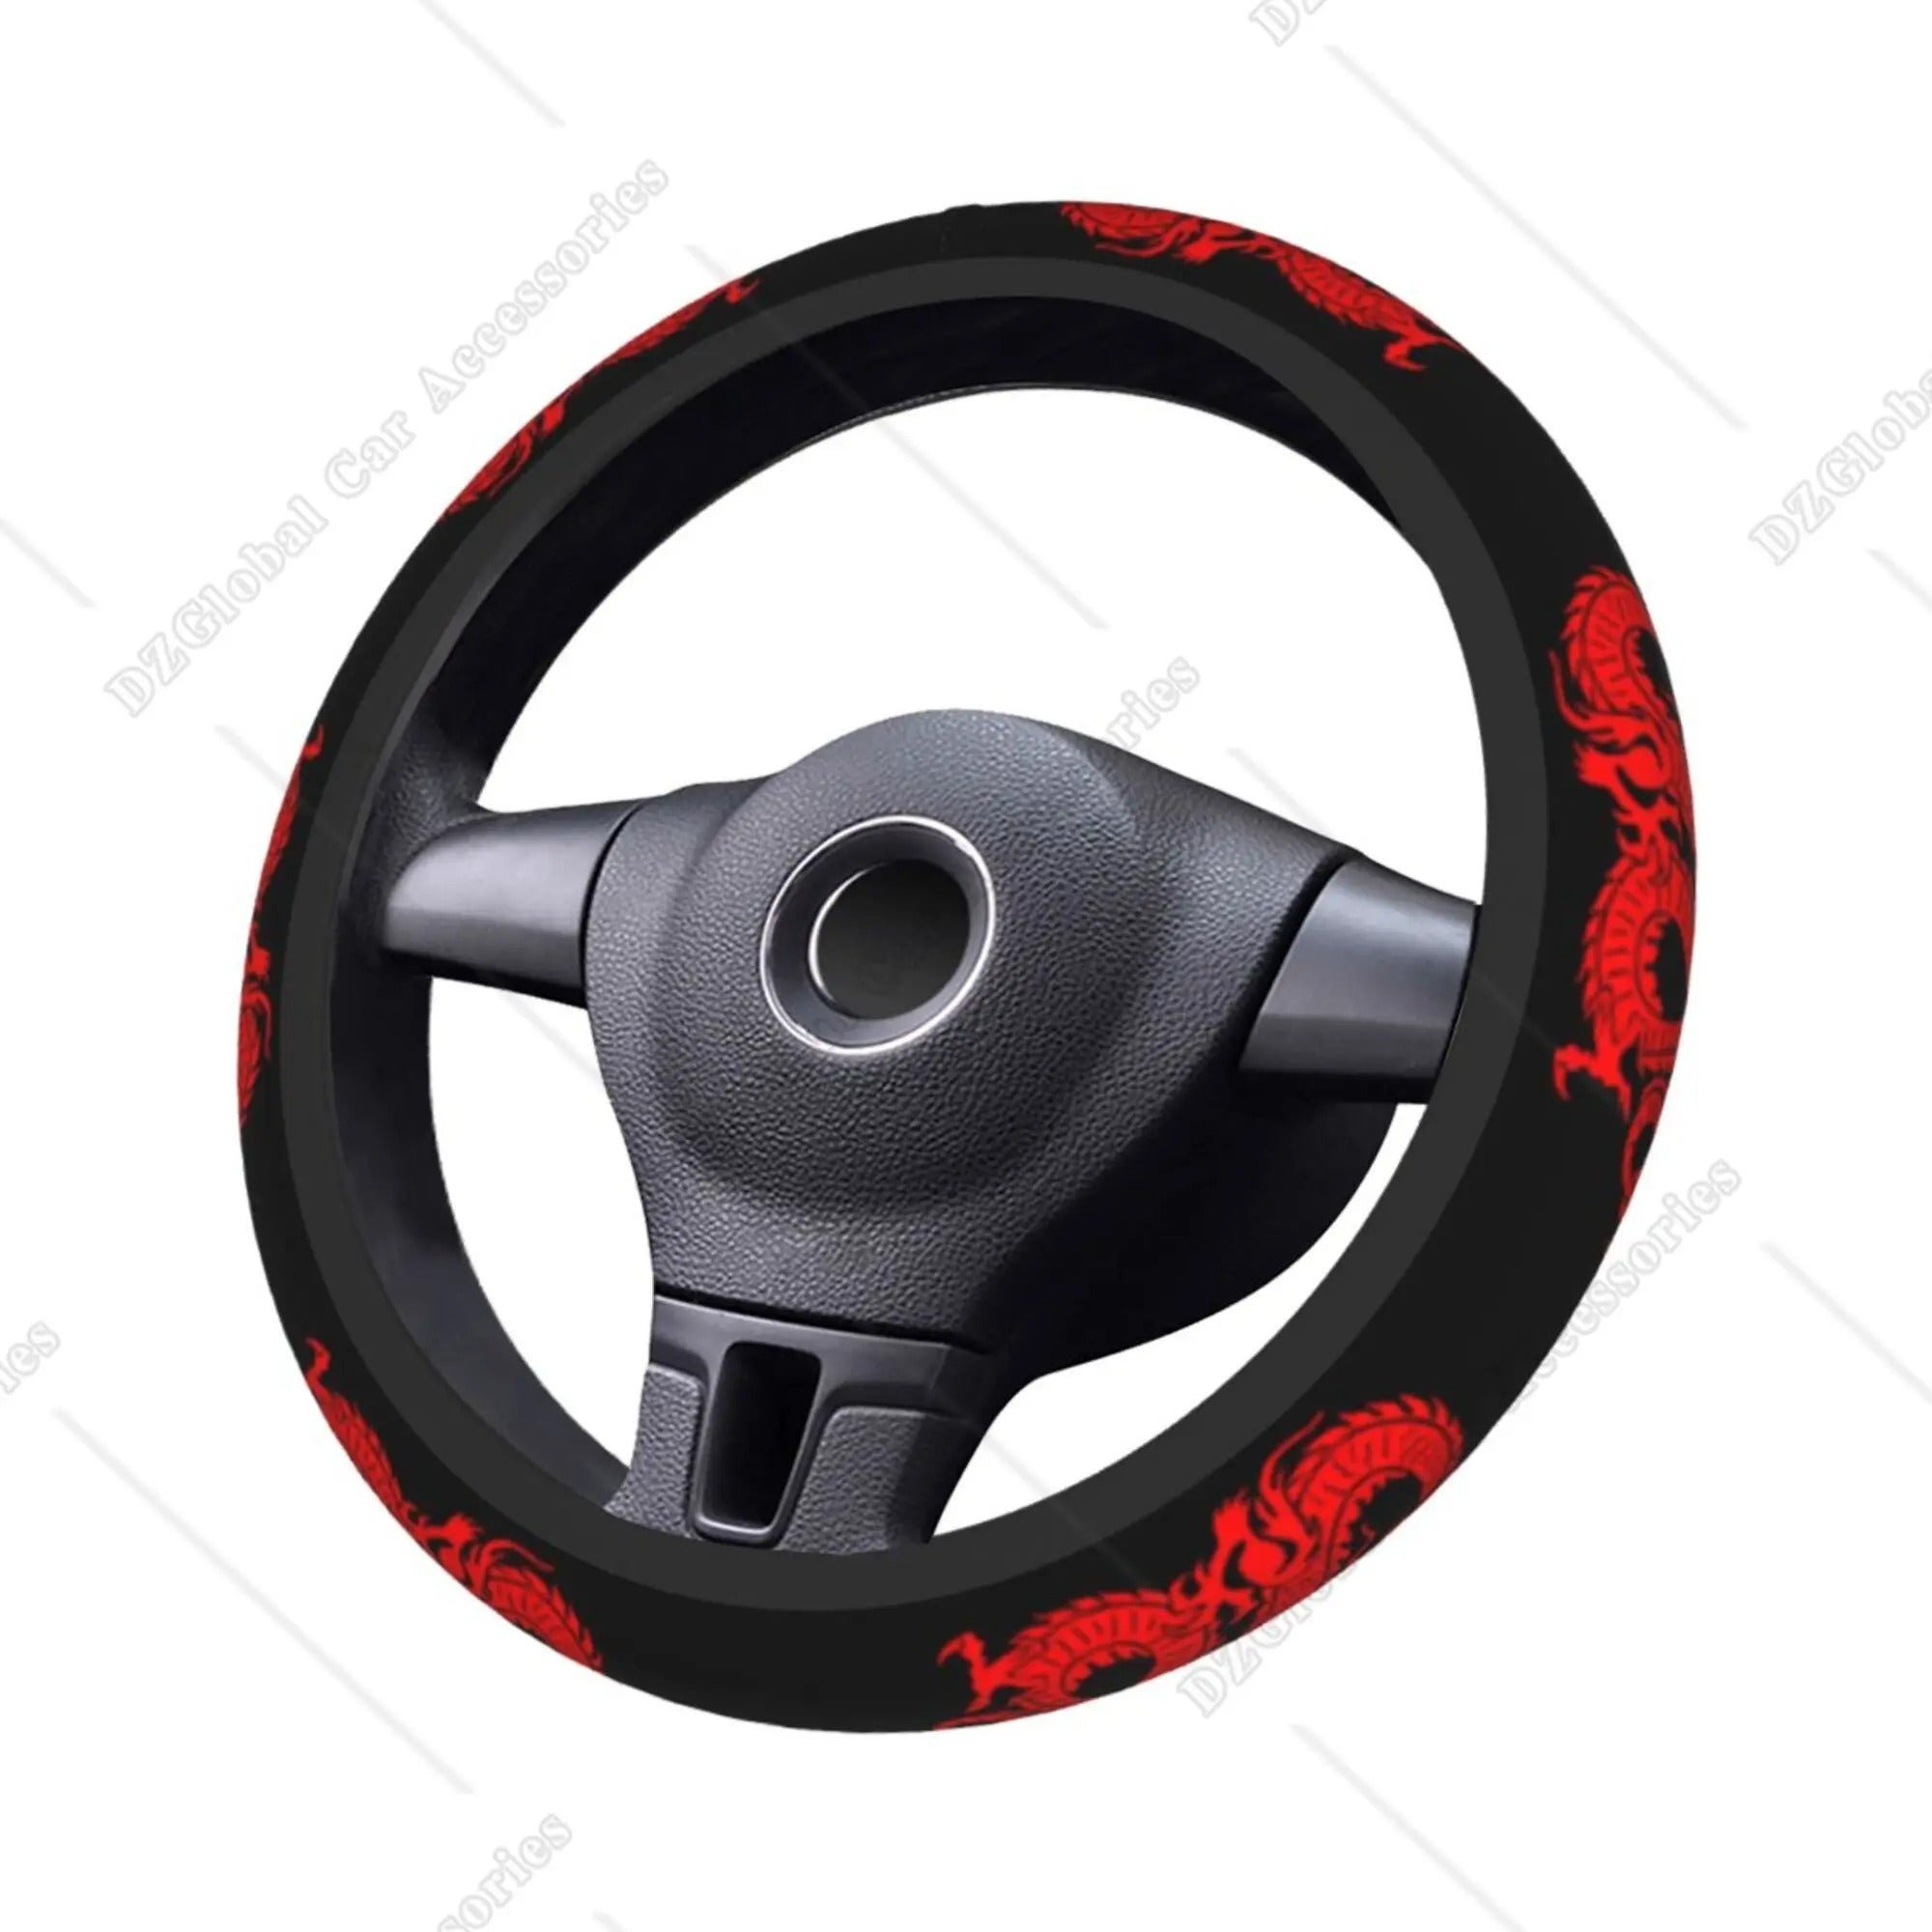 Dragon Red Universal Neoprene Steering Wheel Cover, Car Steering Wheel Cover, Car Accessories 18